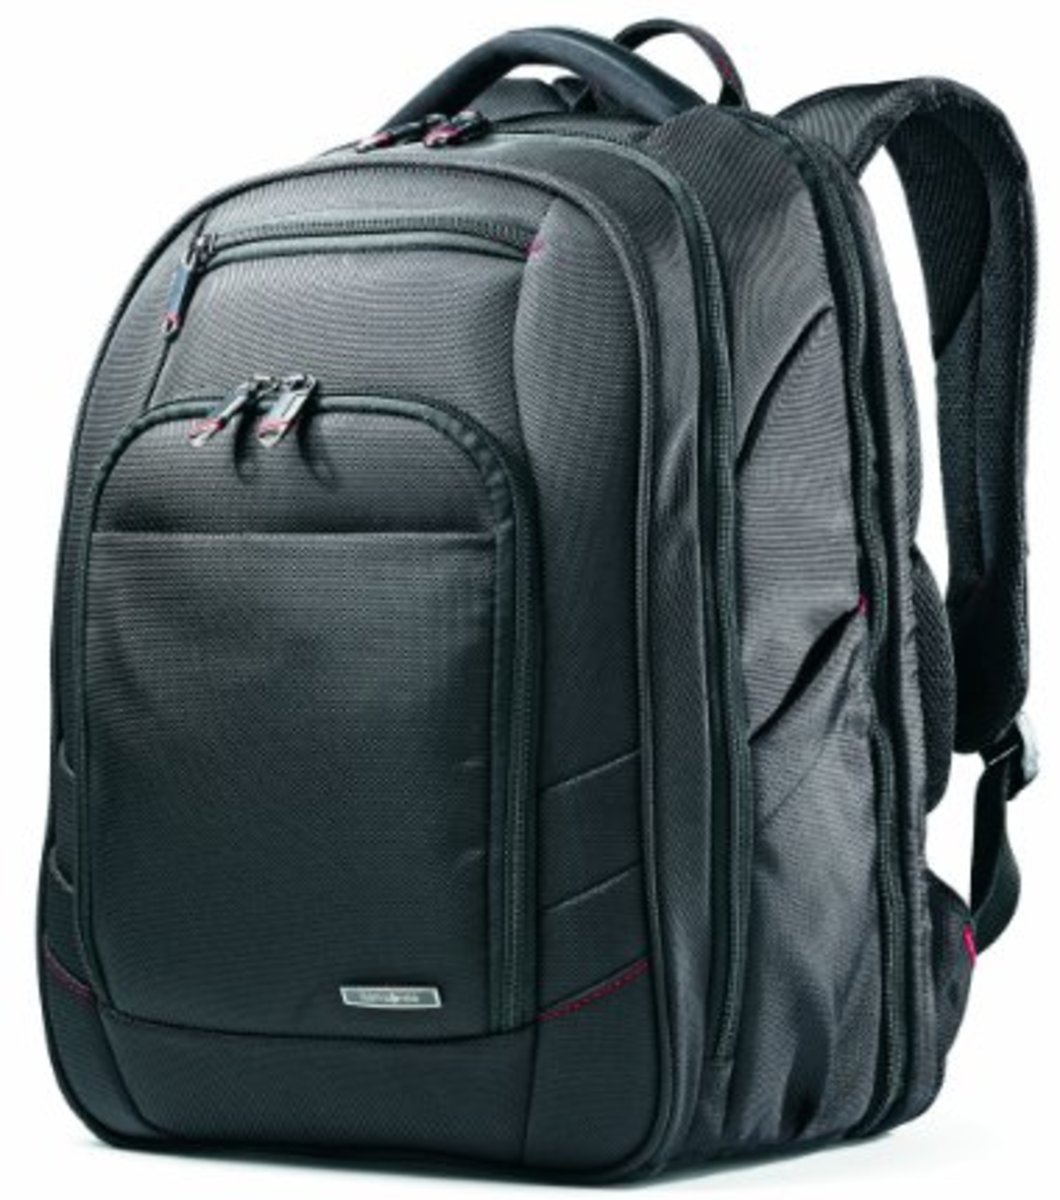 Interesting Landscape Trout Backpack 17 Inch Laptop Bags School Computer Bag